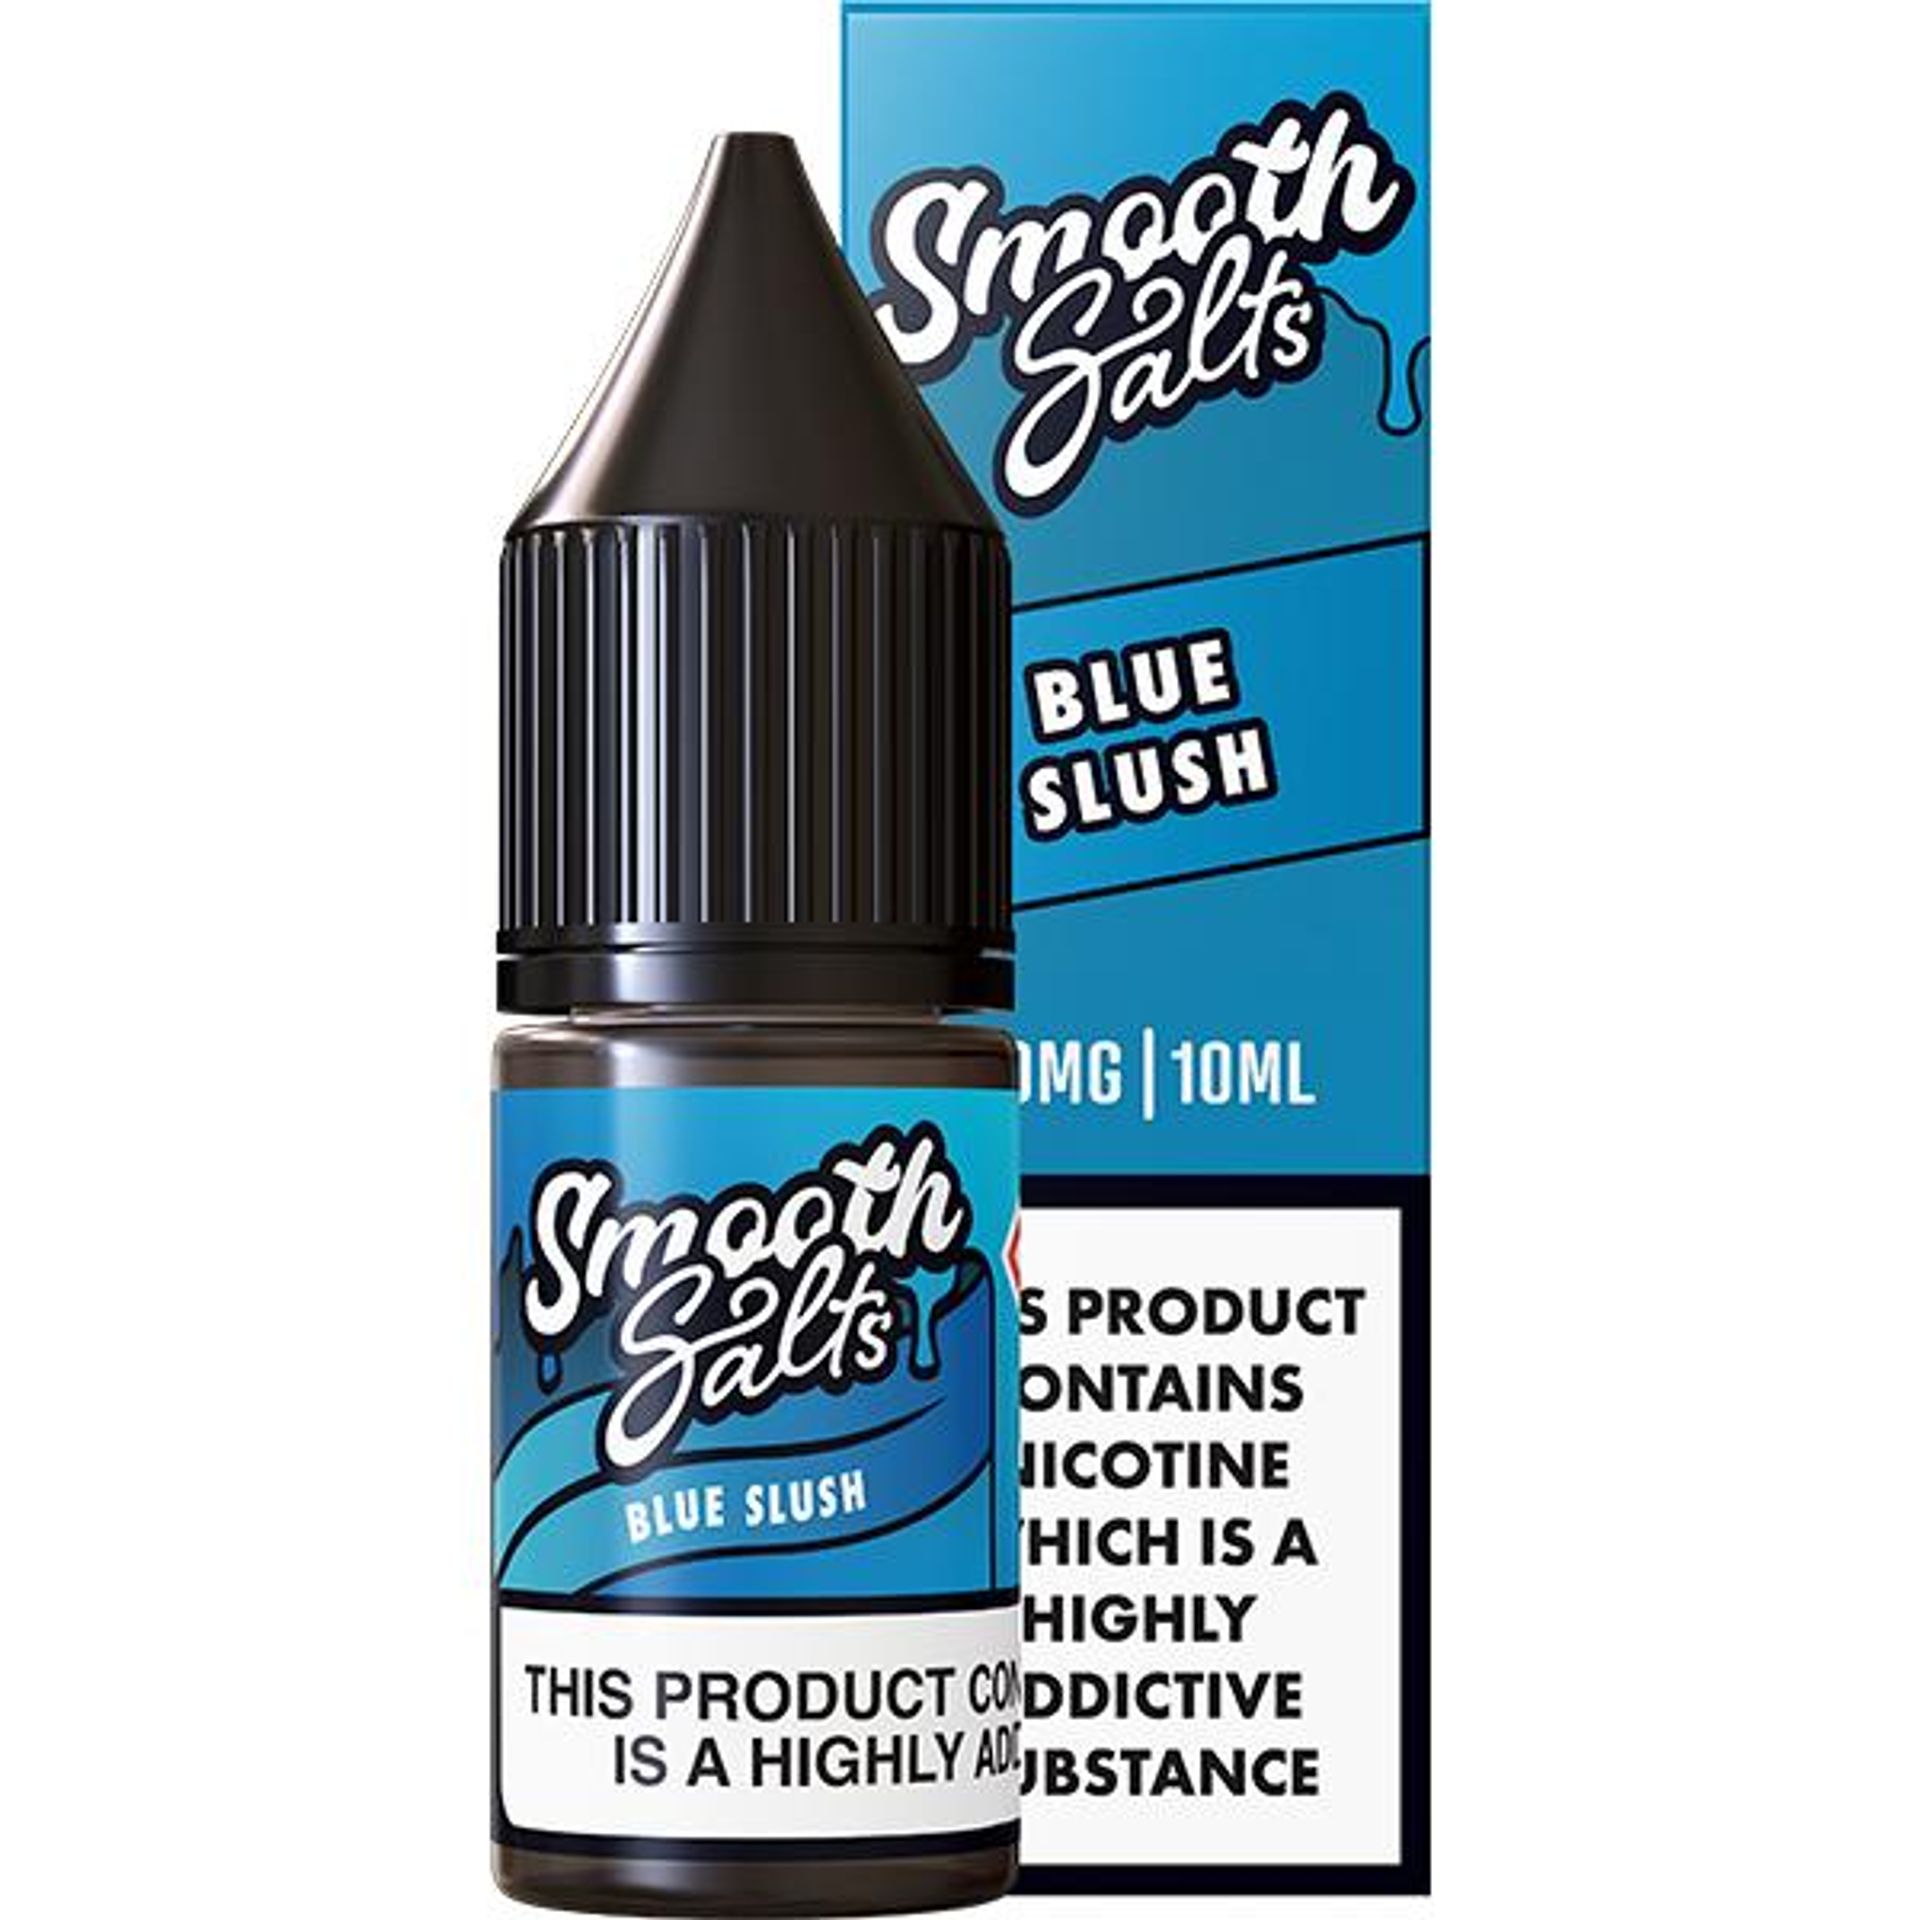 Image of Blue Slush by Smooth Salts